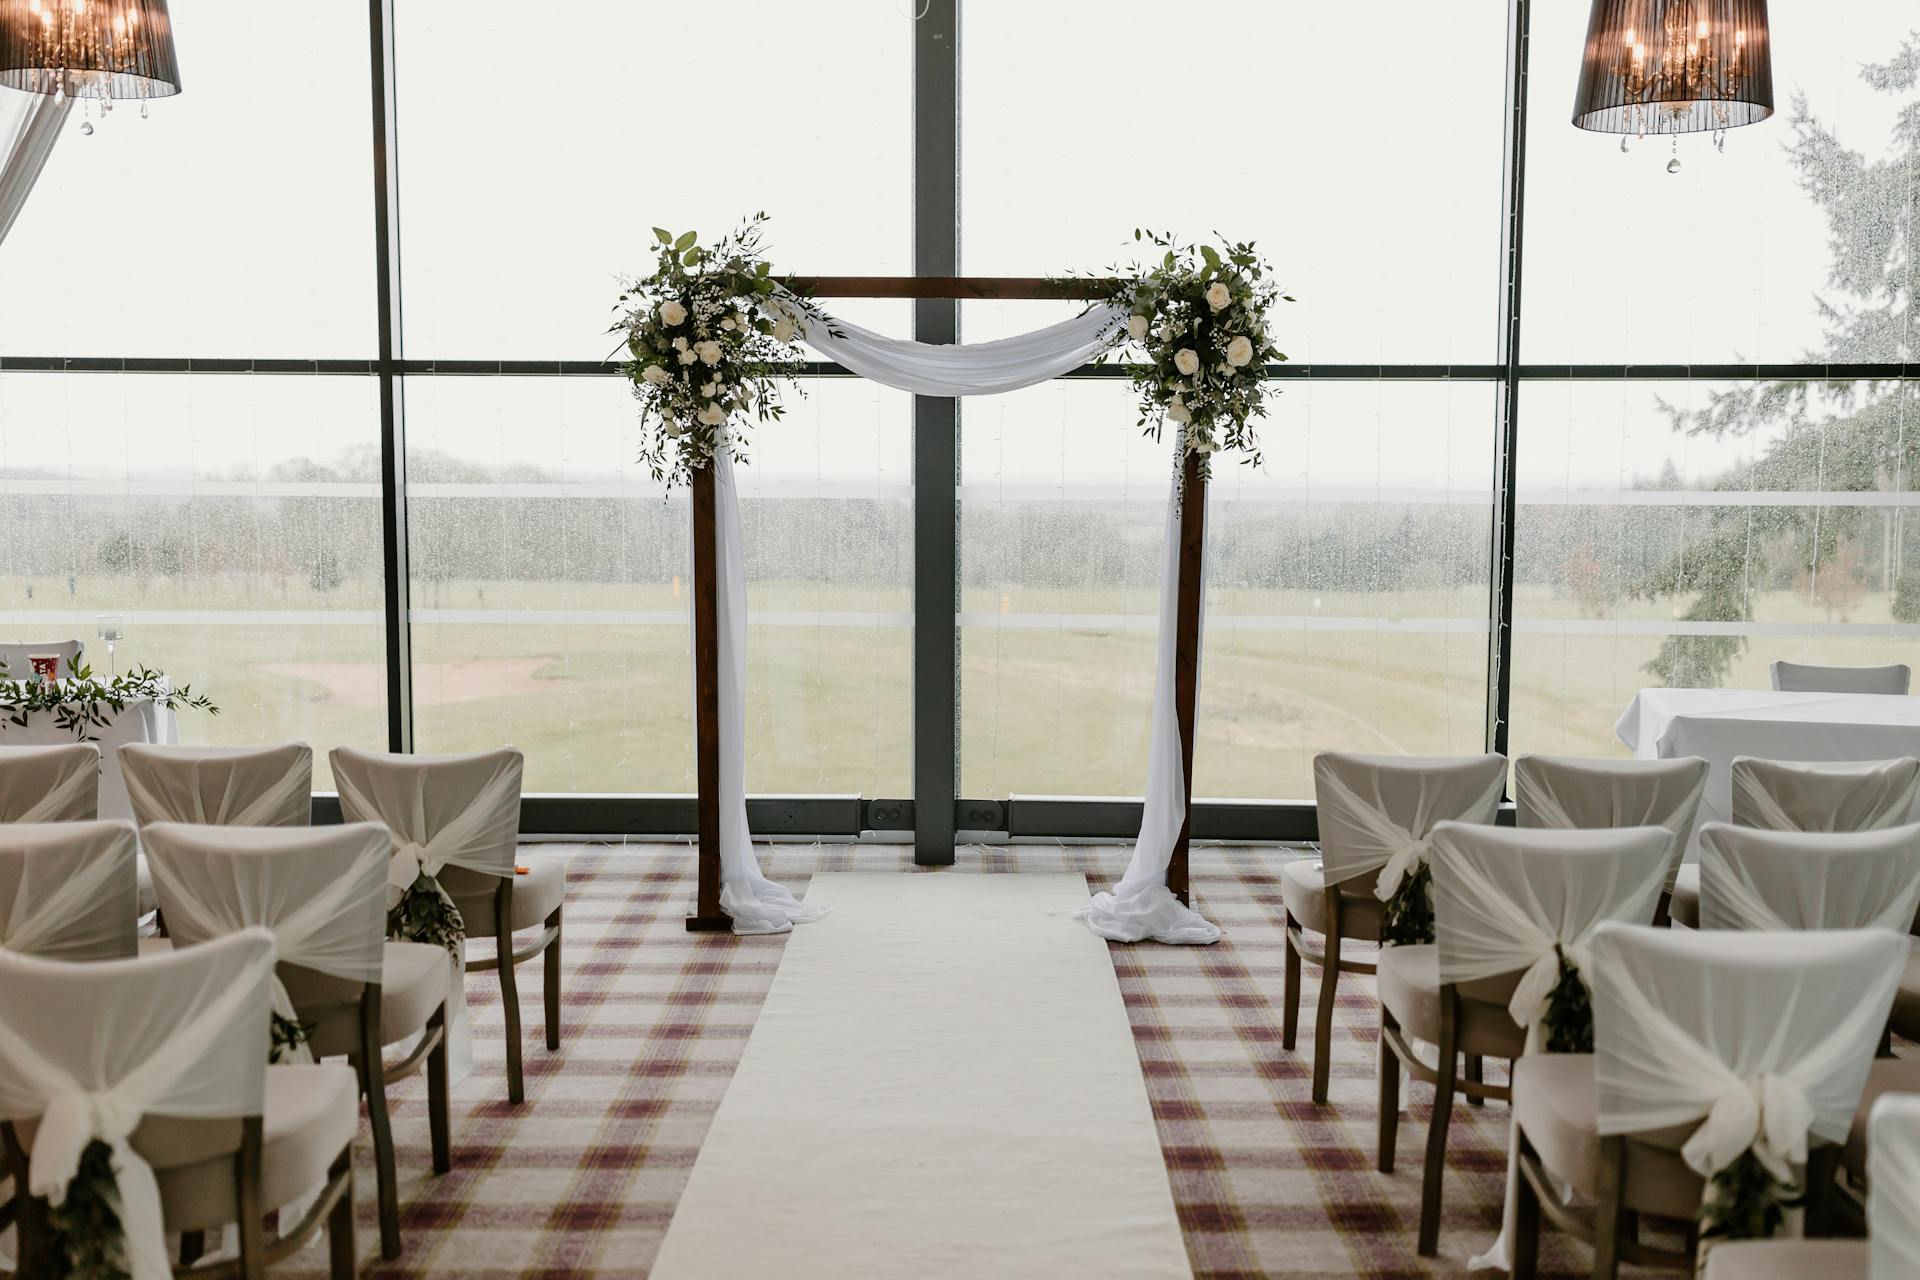 Lugar de una boda | Foto: Pexels